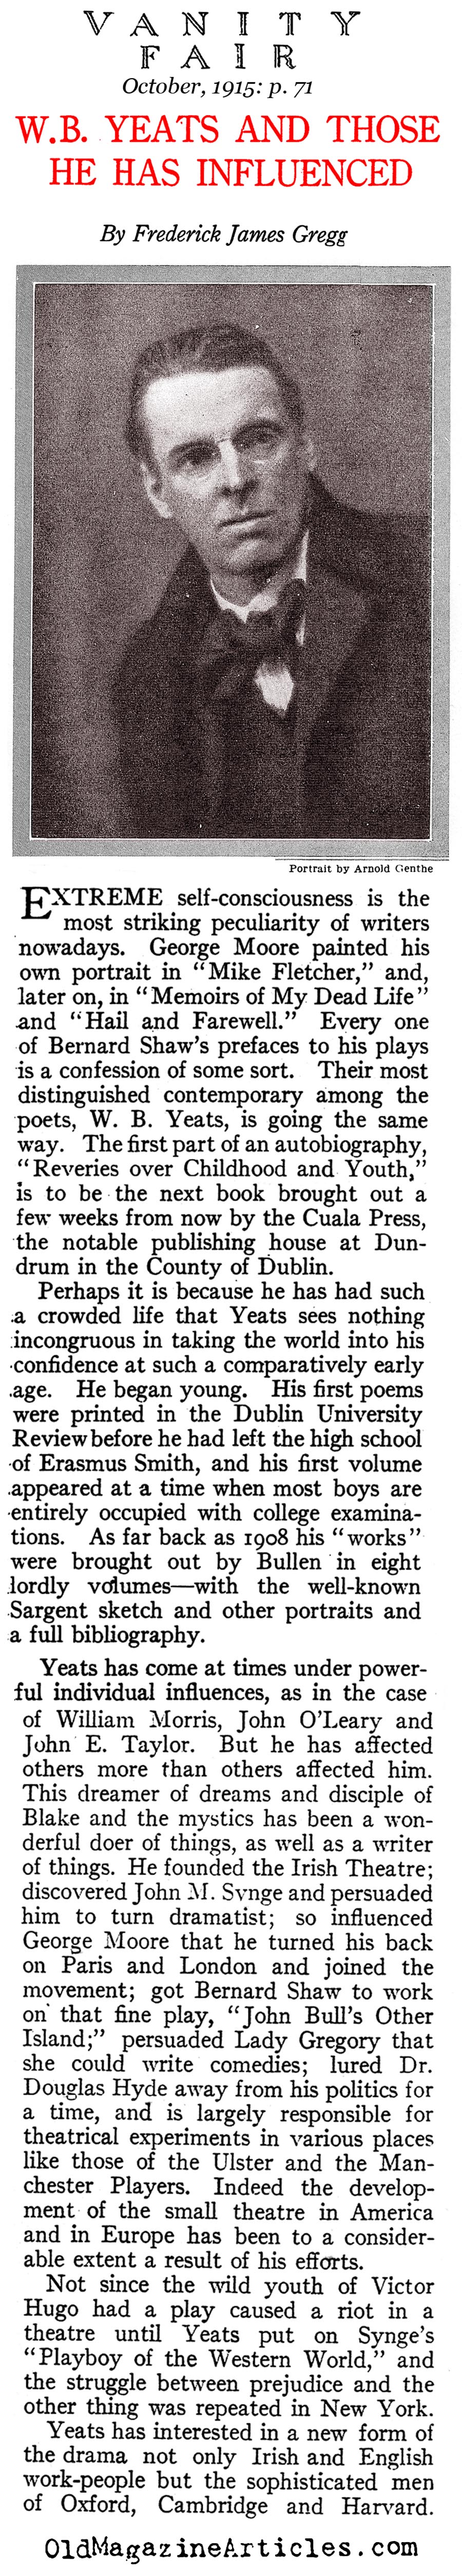 ''W. B. Yeats and Those He Has Influenced'' (Vanity Fair,1915)